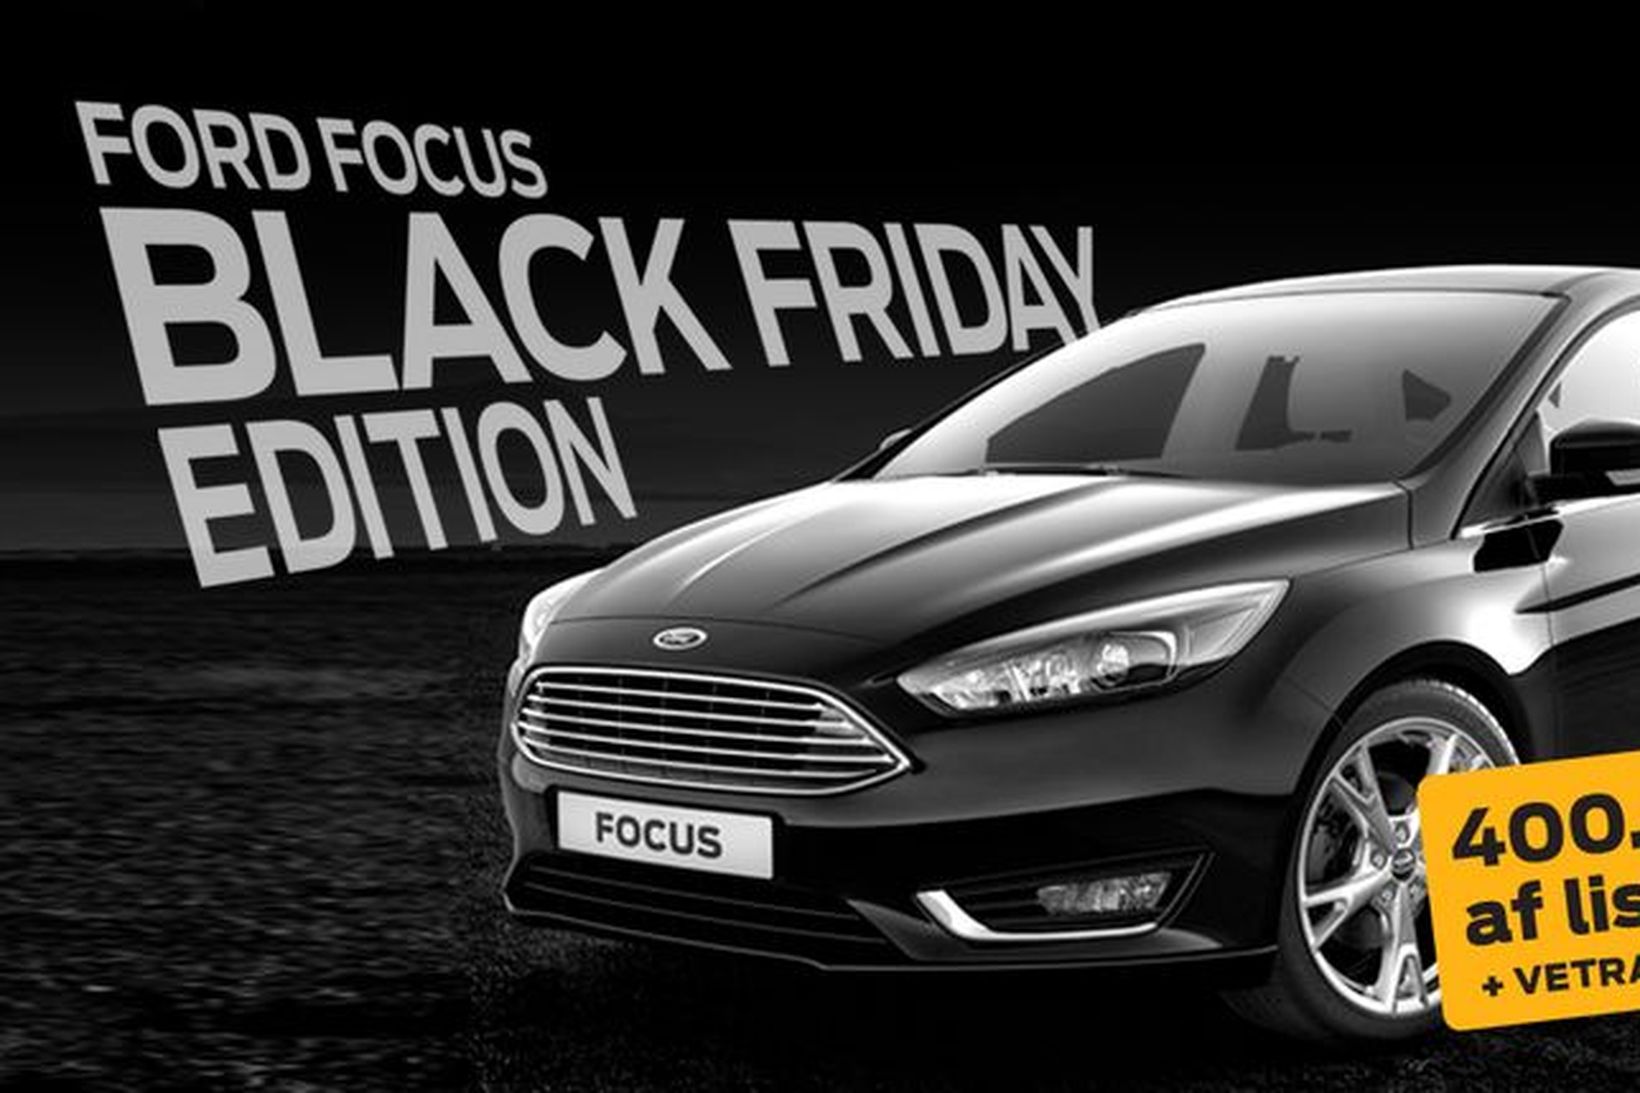 Ford Focus Black Friday Edition.